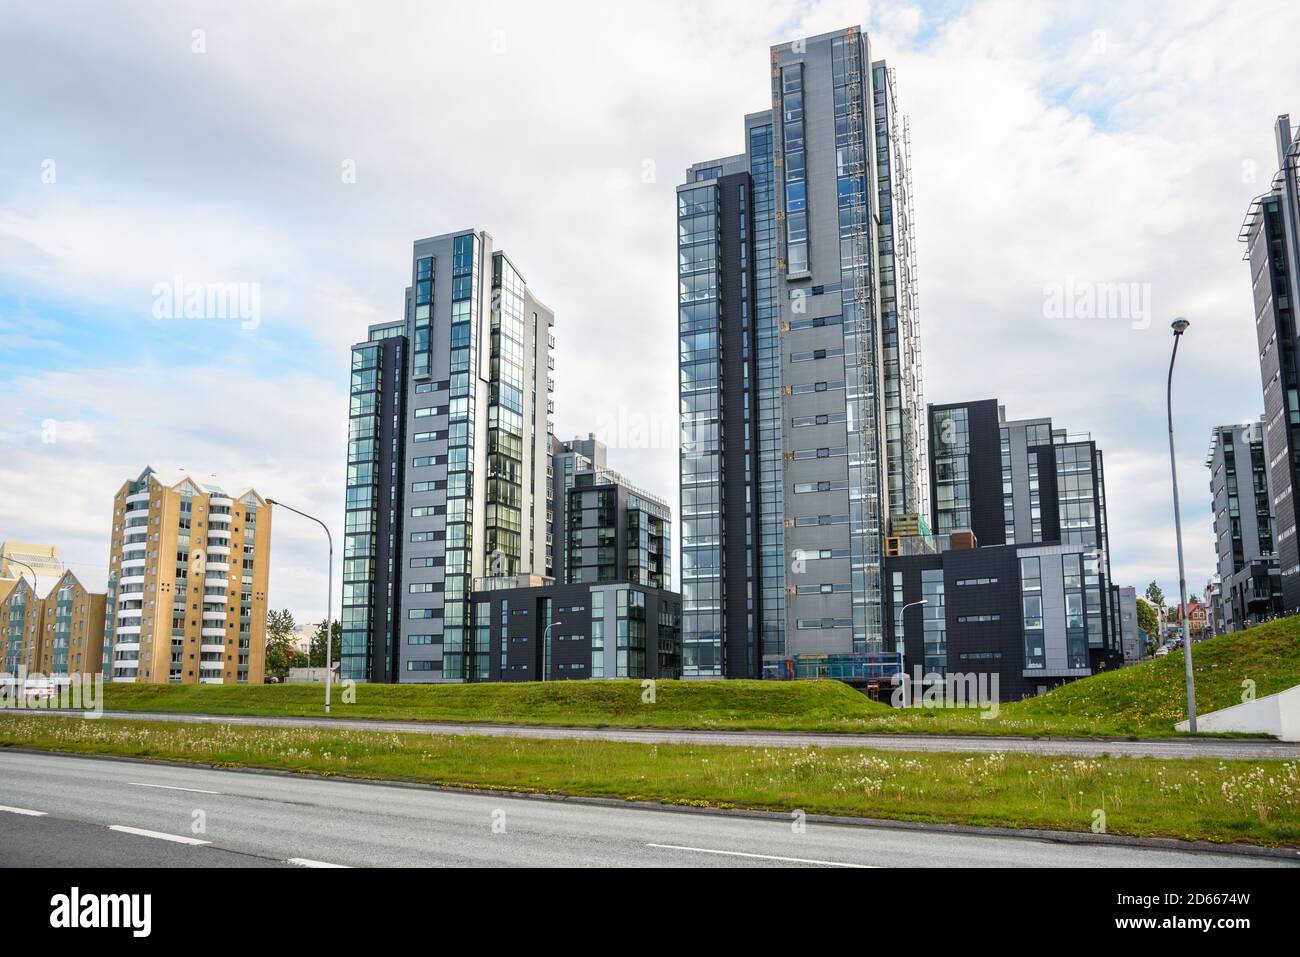 Newly built high rise apartment buildings along a major urban road Stock Photo